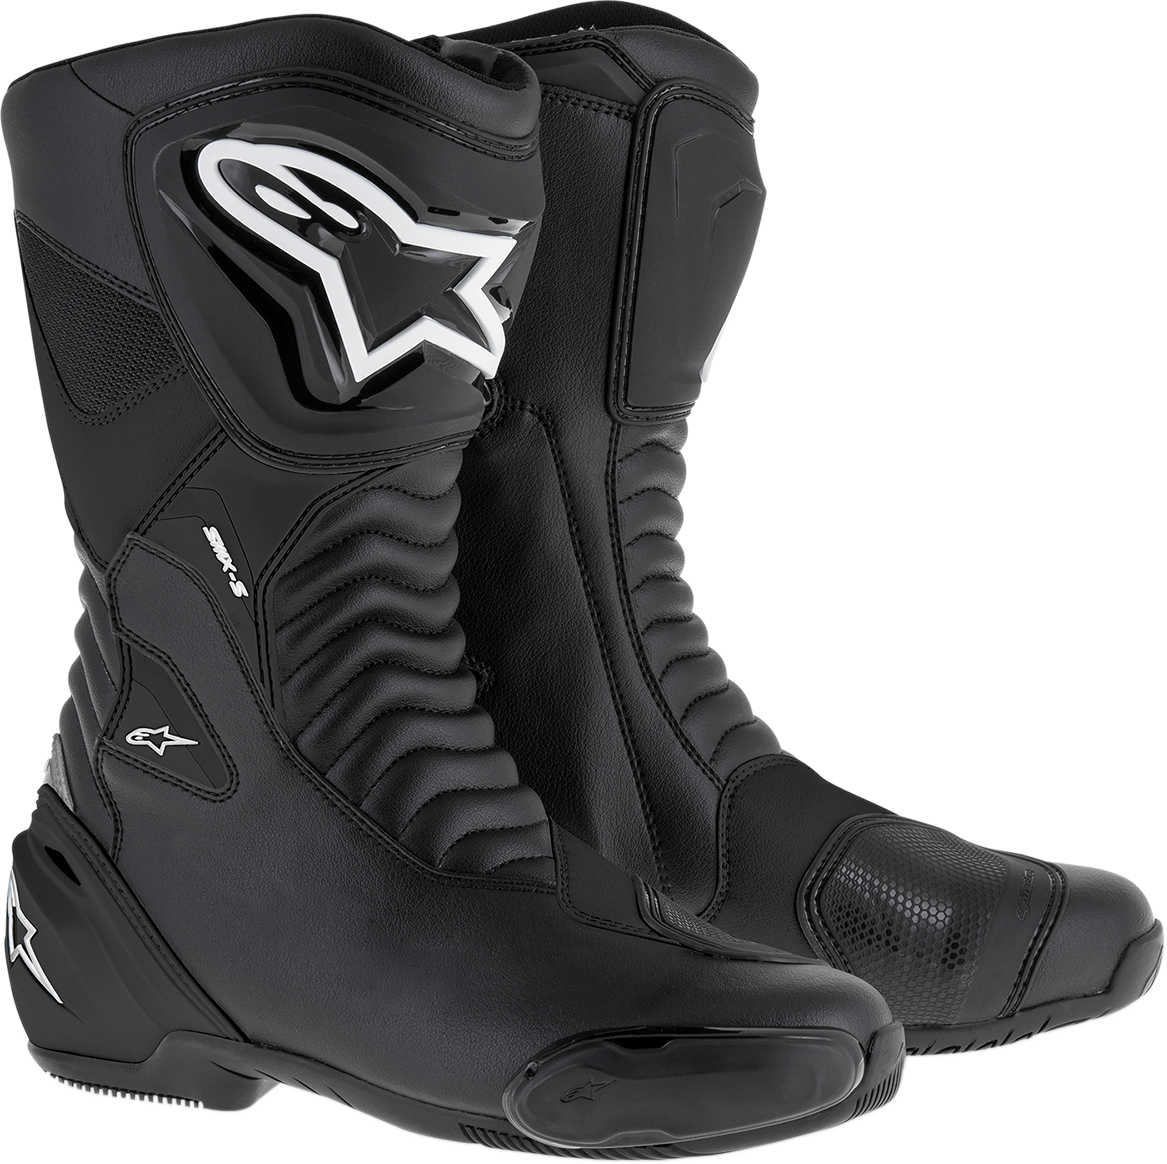 Alpinestars Mens S-MX S Black Textile Motorcycle Riding Street Racing Boots